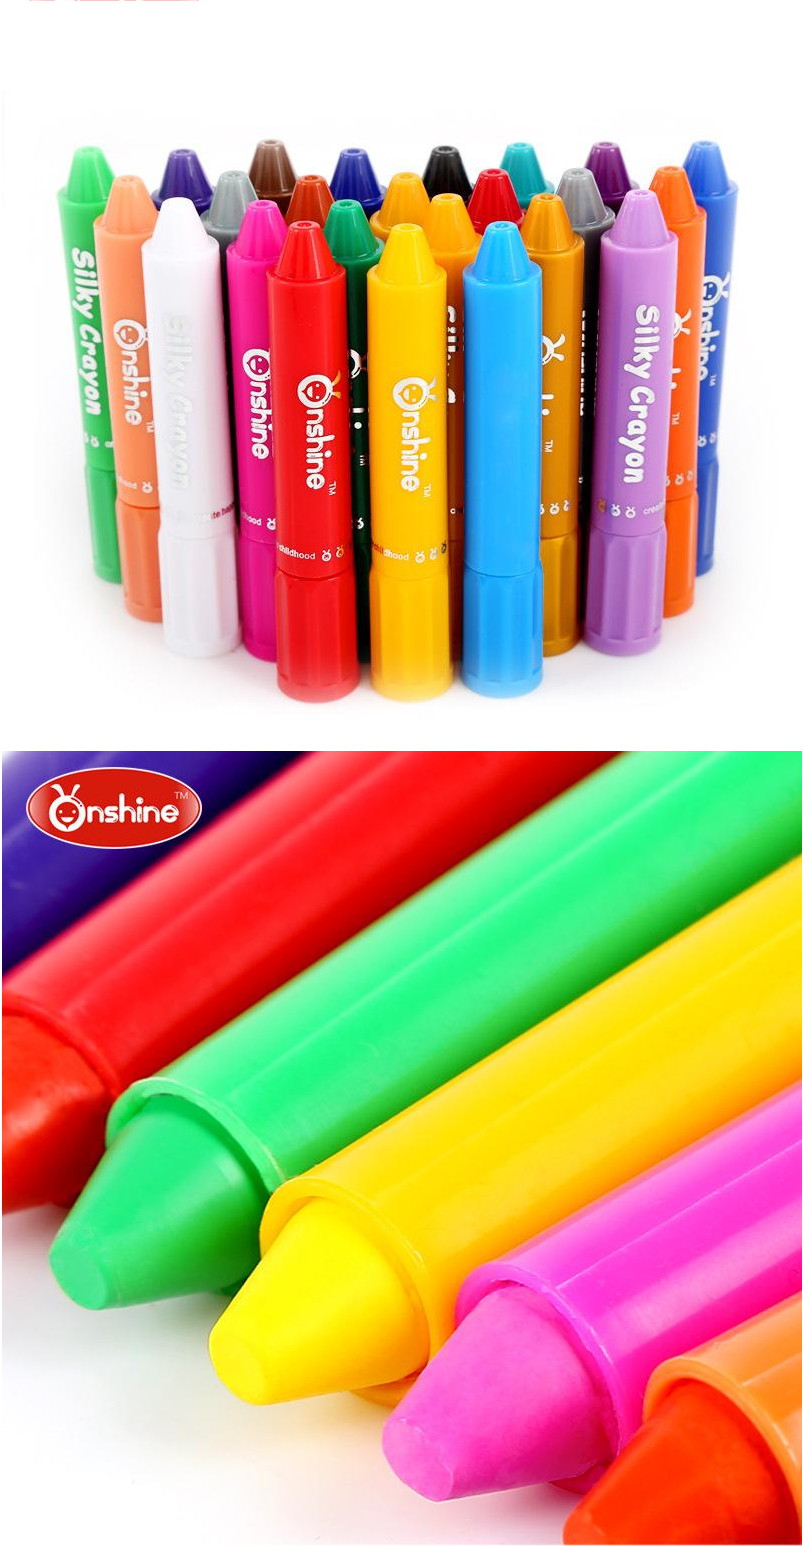 Onshine-18-Pcs-Crayon-Pens-Watercolor-Non-Toxic-Washable-Crayons-Art-Painting-Tools-Office-School-Su-1544858-1